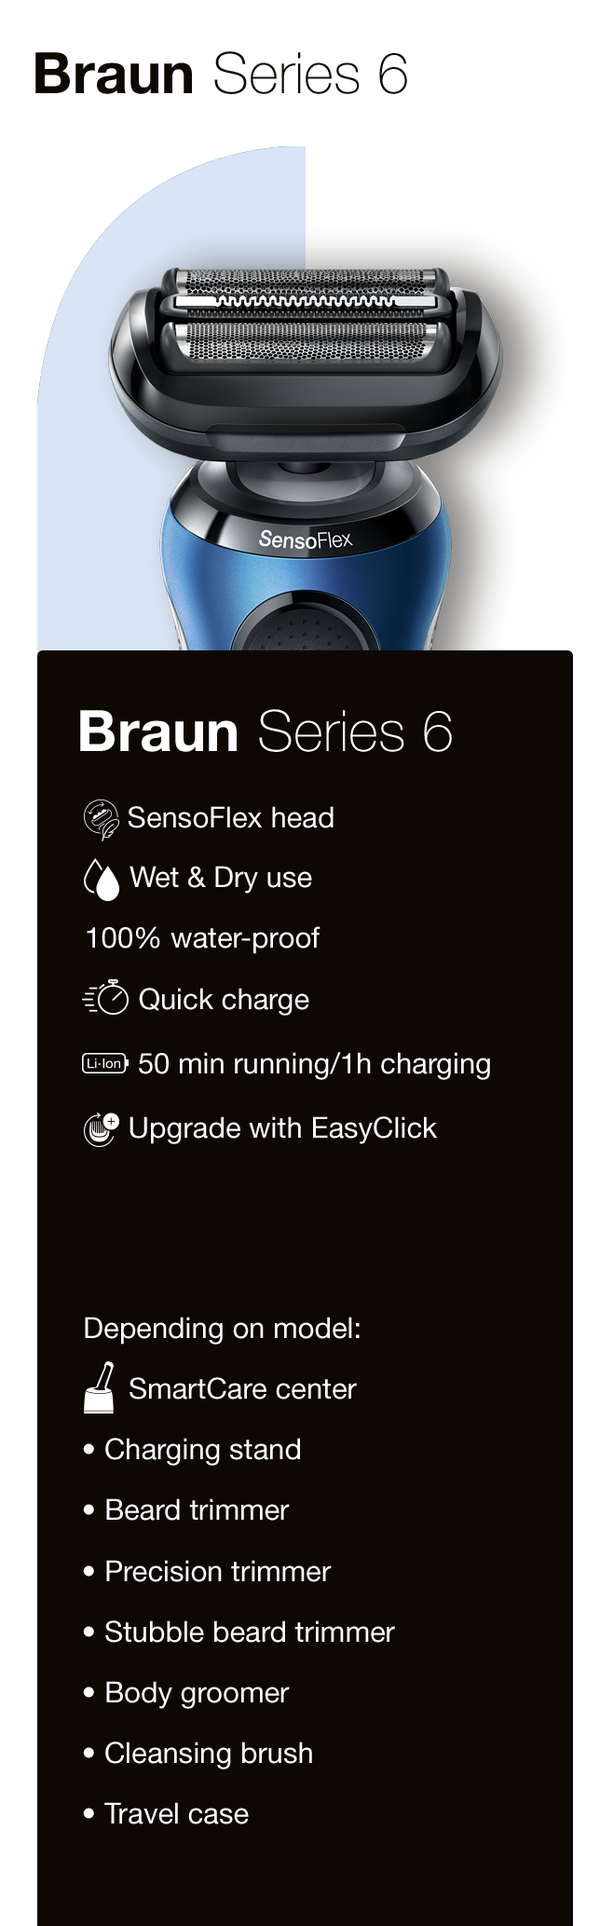 Braun series 6 electric shaver USP's